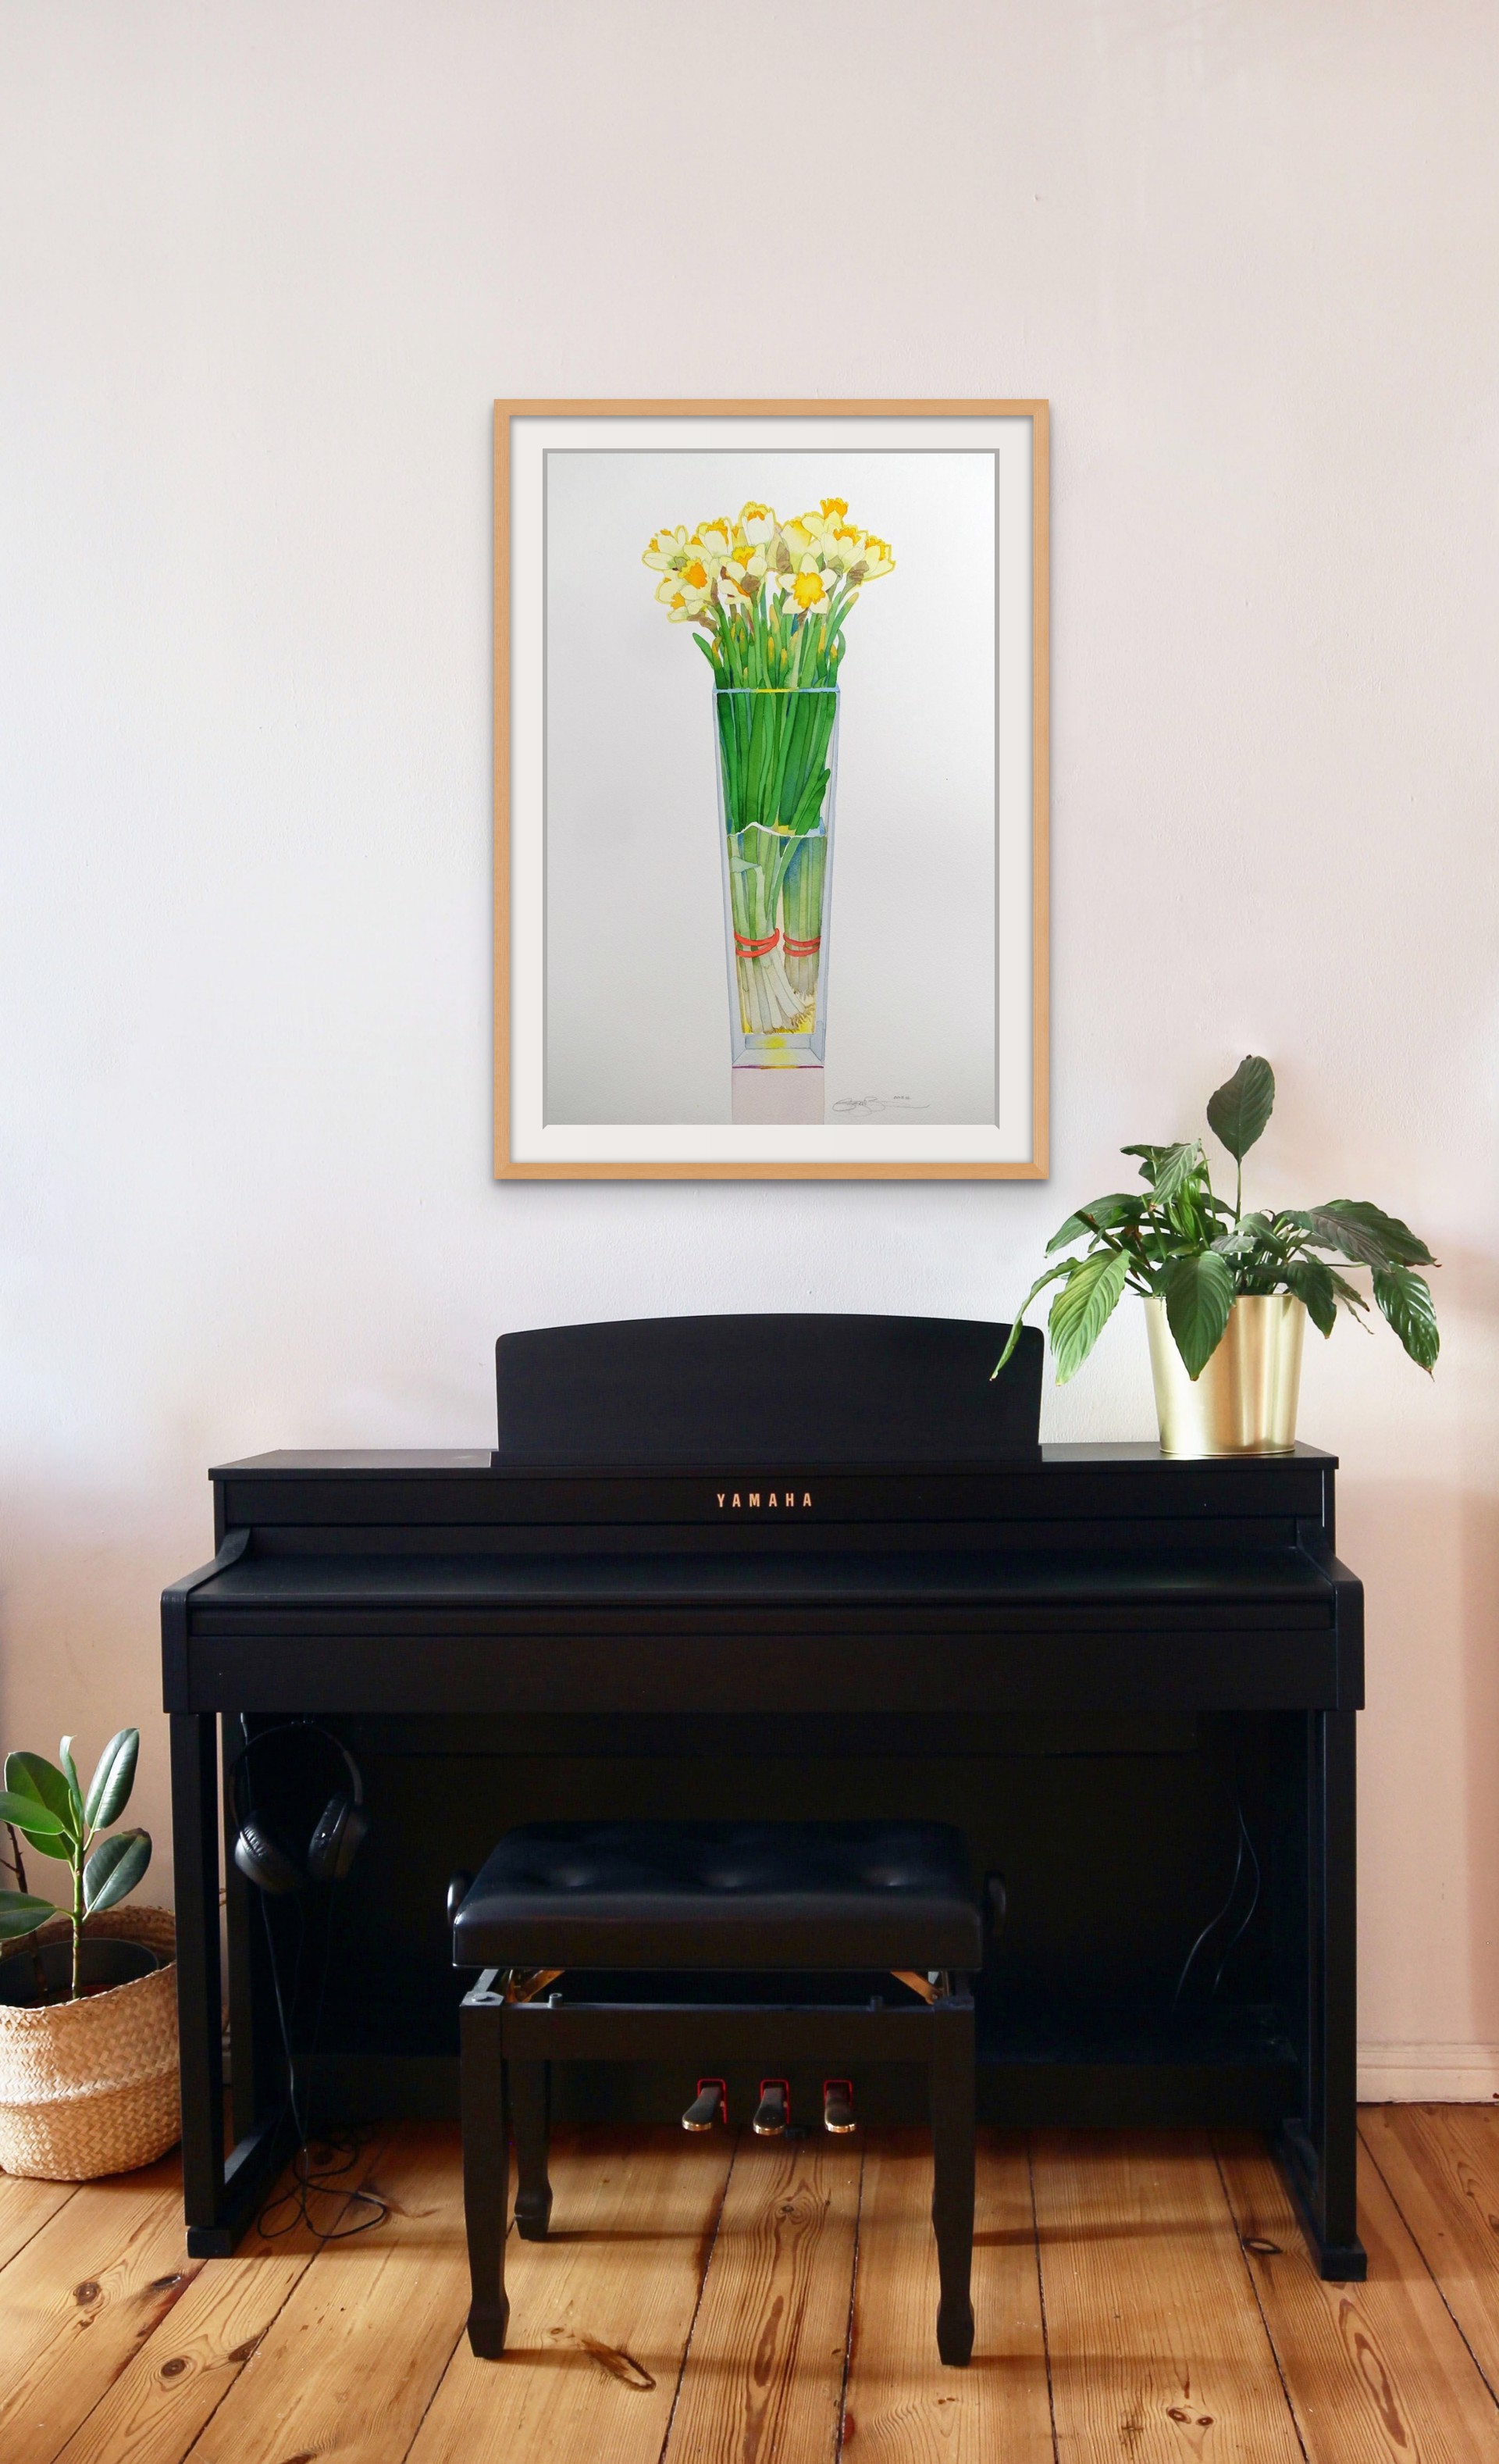 Daffodils in a Tall Vase by Gary Bukovnik